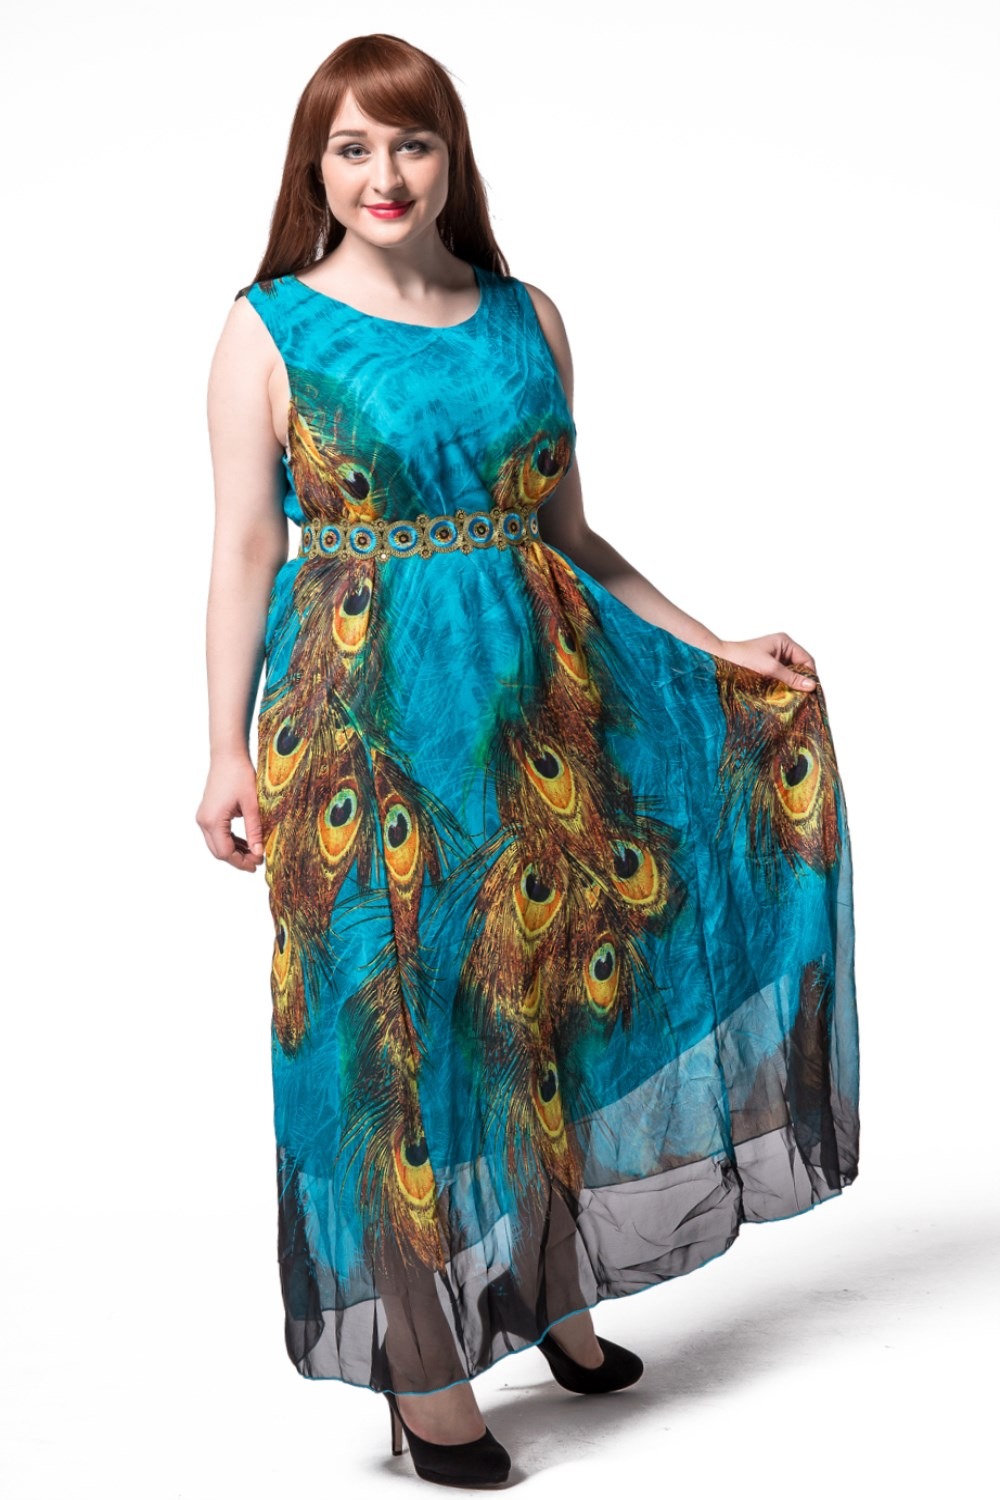 Plus size peacock dress - PlusLook.eu Collection